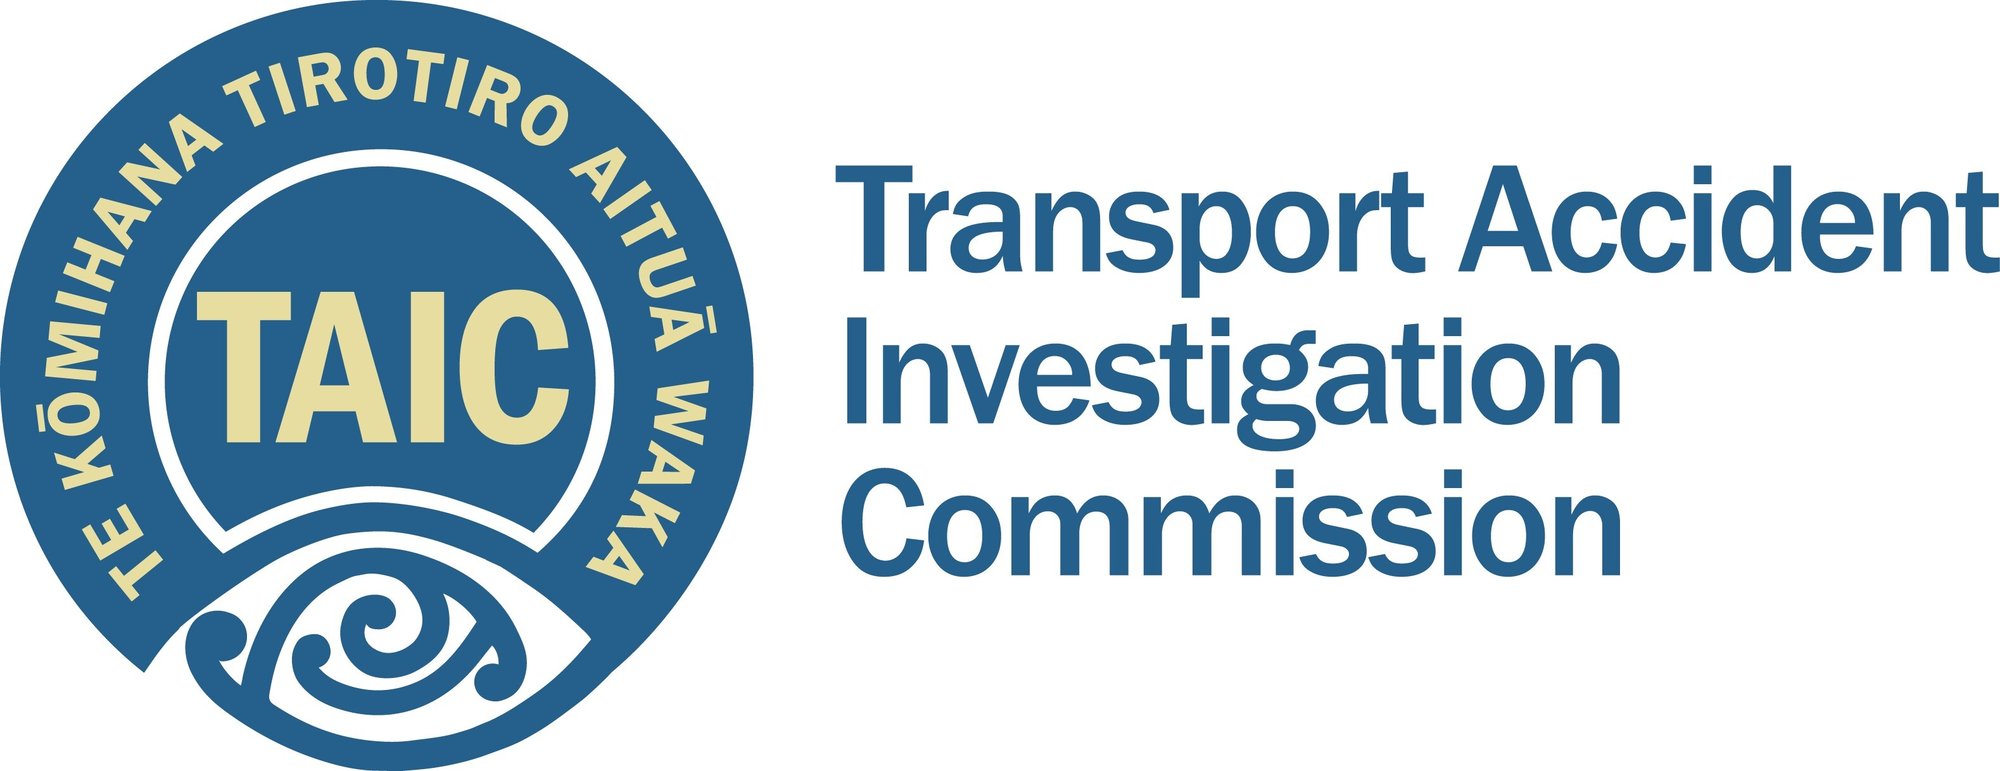 Transport Accident Investigation Commission Logo